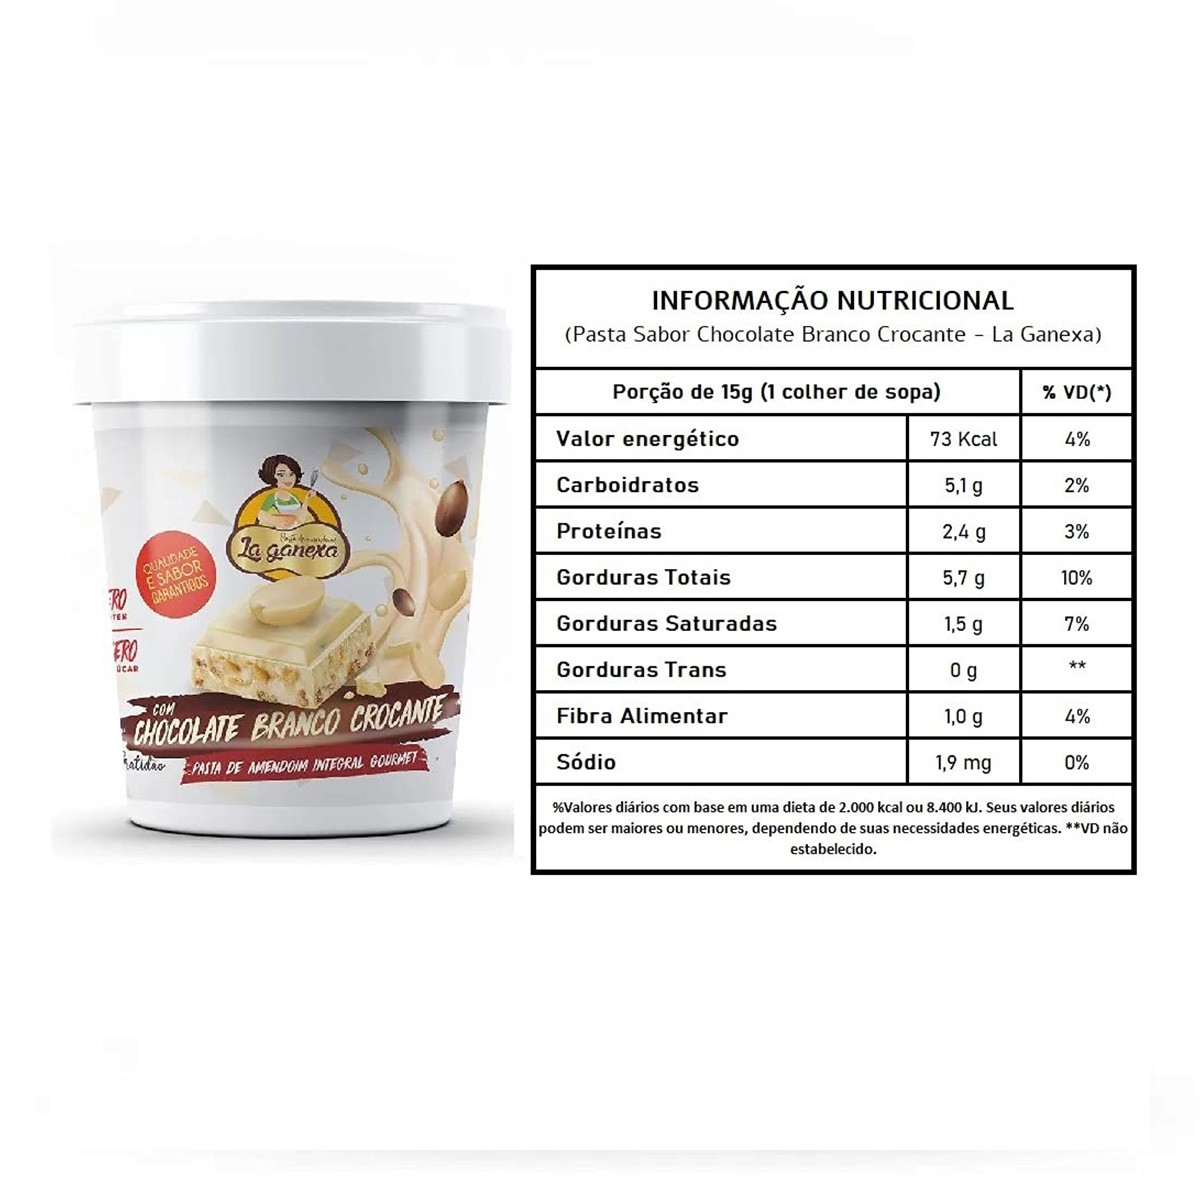 https://www.drogariaminasbrasil.com.br/media/product/014/pasta-de-amendoim-integral-com-chocolate-branco-crocante-450g-la-ganexa-63e.jpg